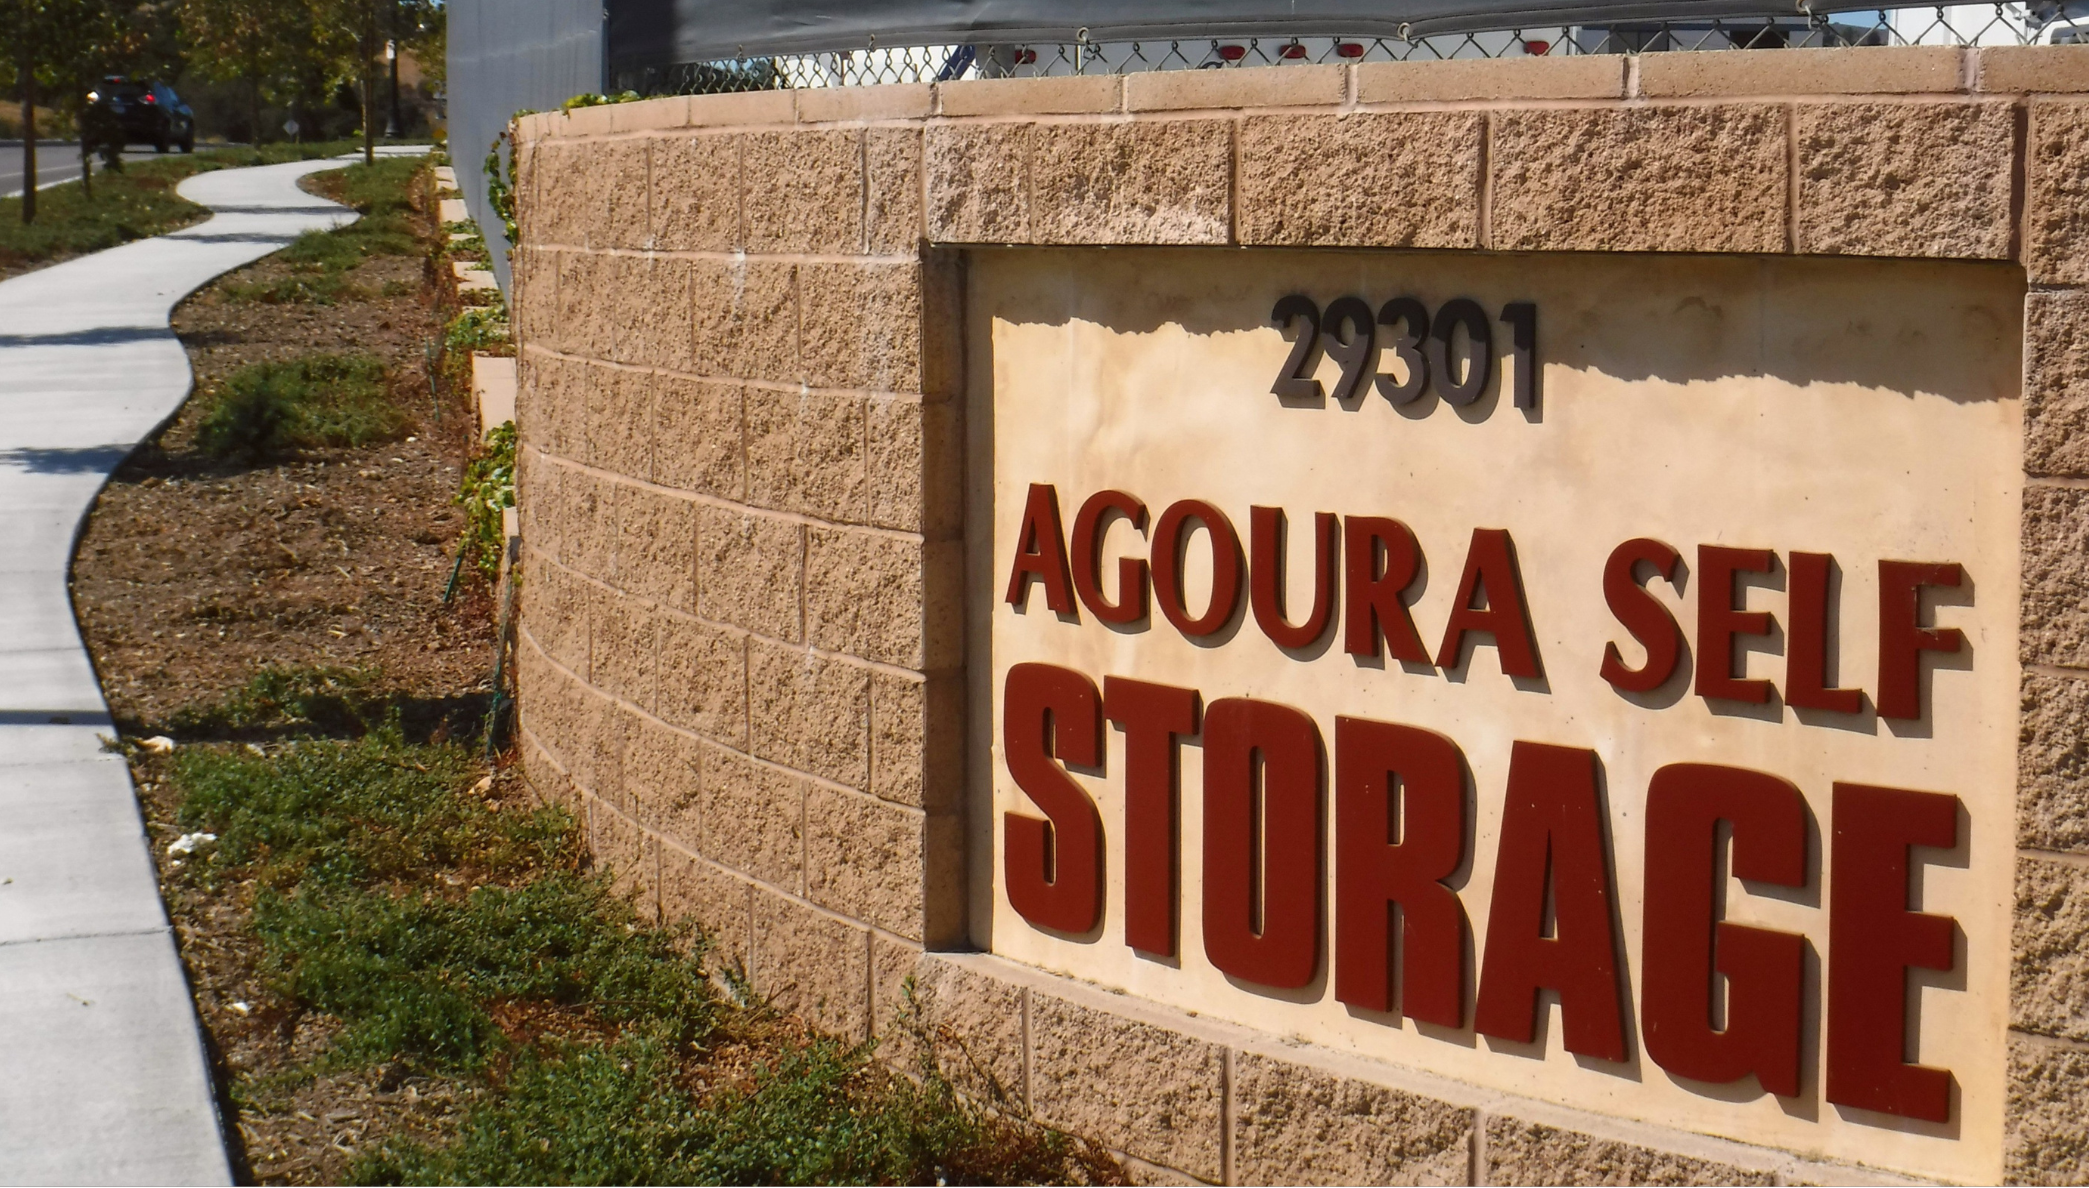 Agoura Self Storage Front Sign